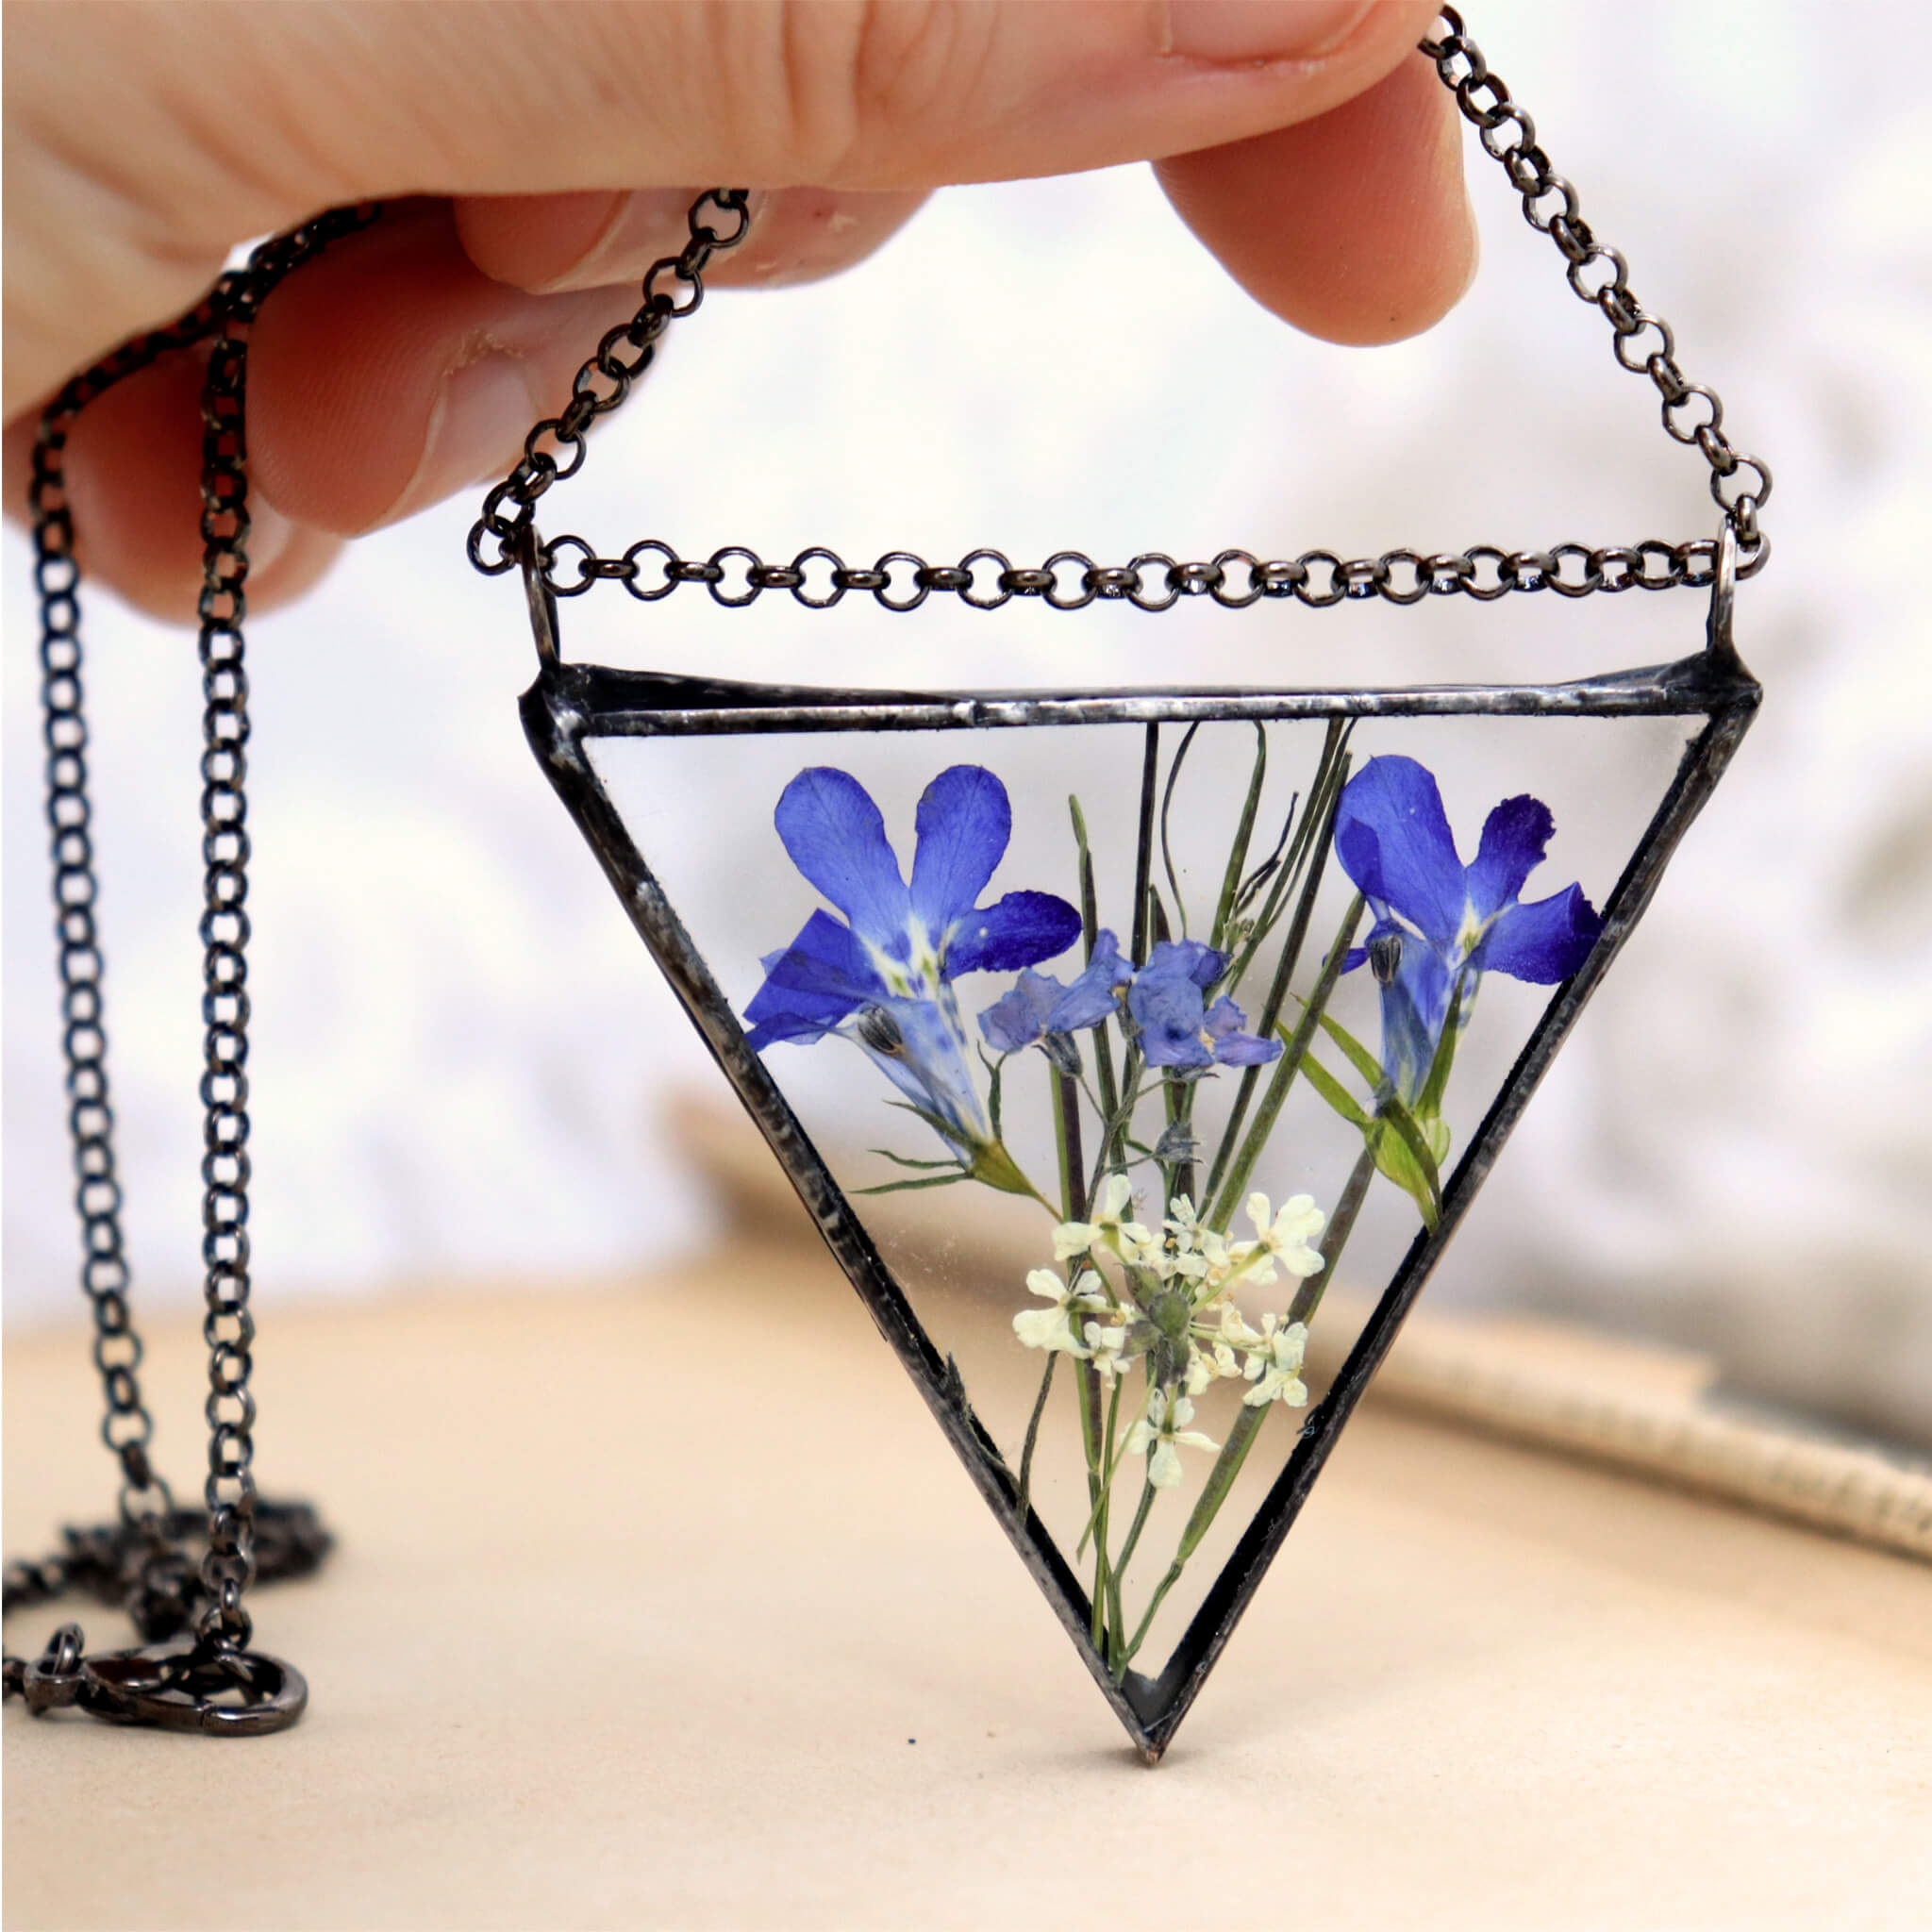 Triangular pressed lobelia flowers necklace